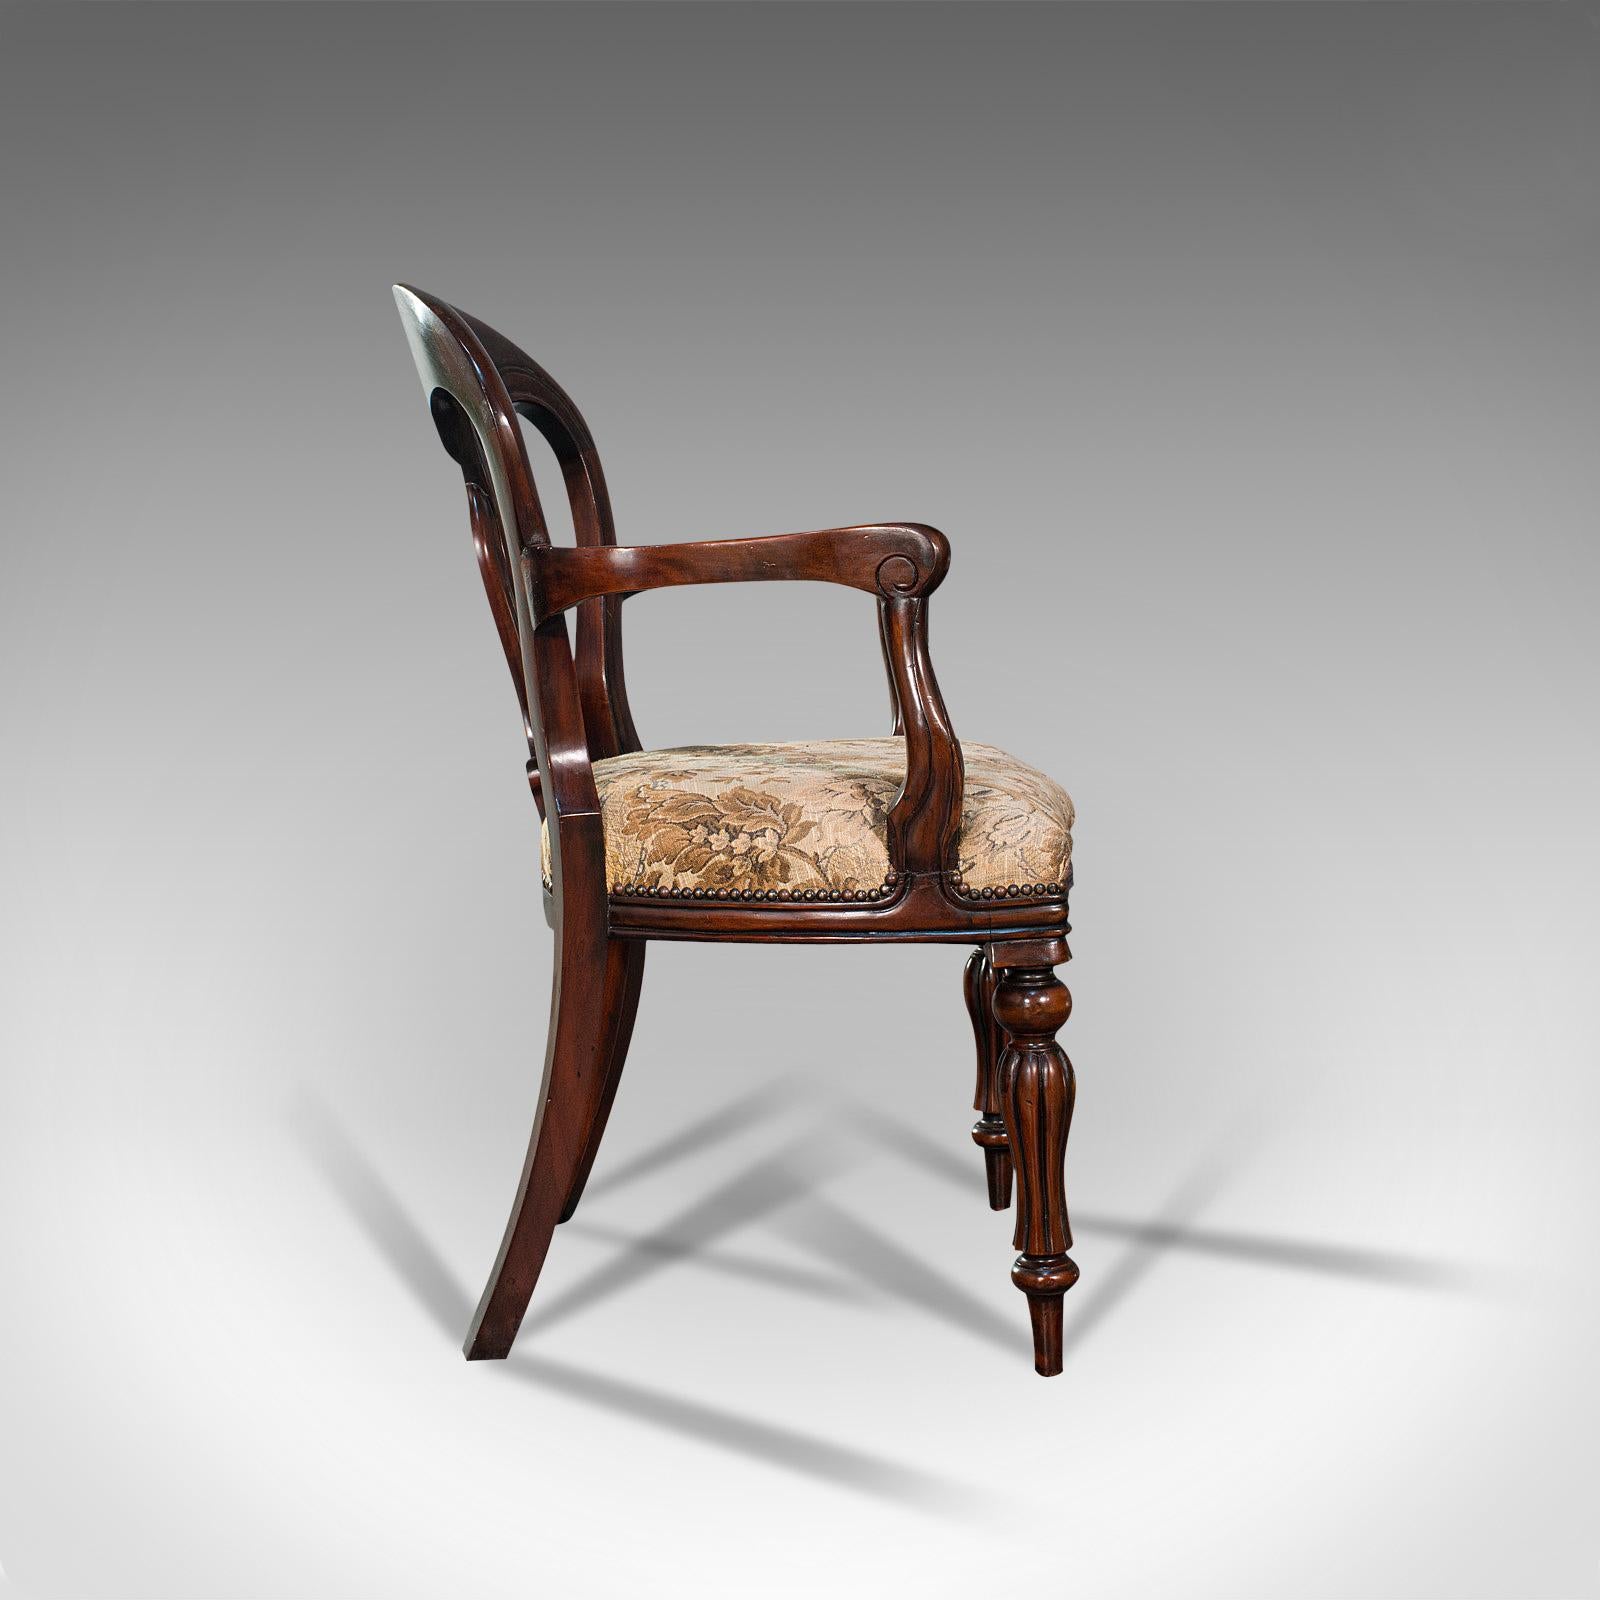 20th Century Vintage Dining Chair Set, English, Mahogany, Carver, 6, Regency Revival